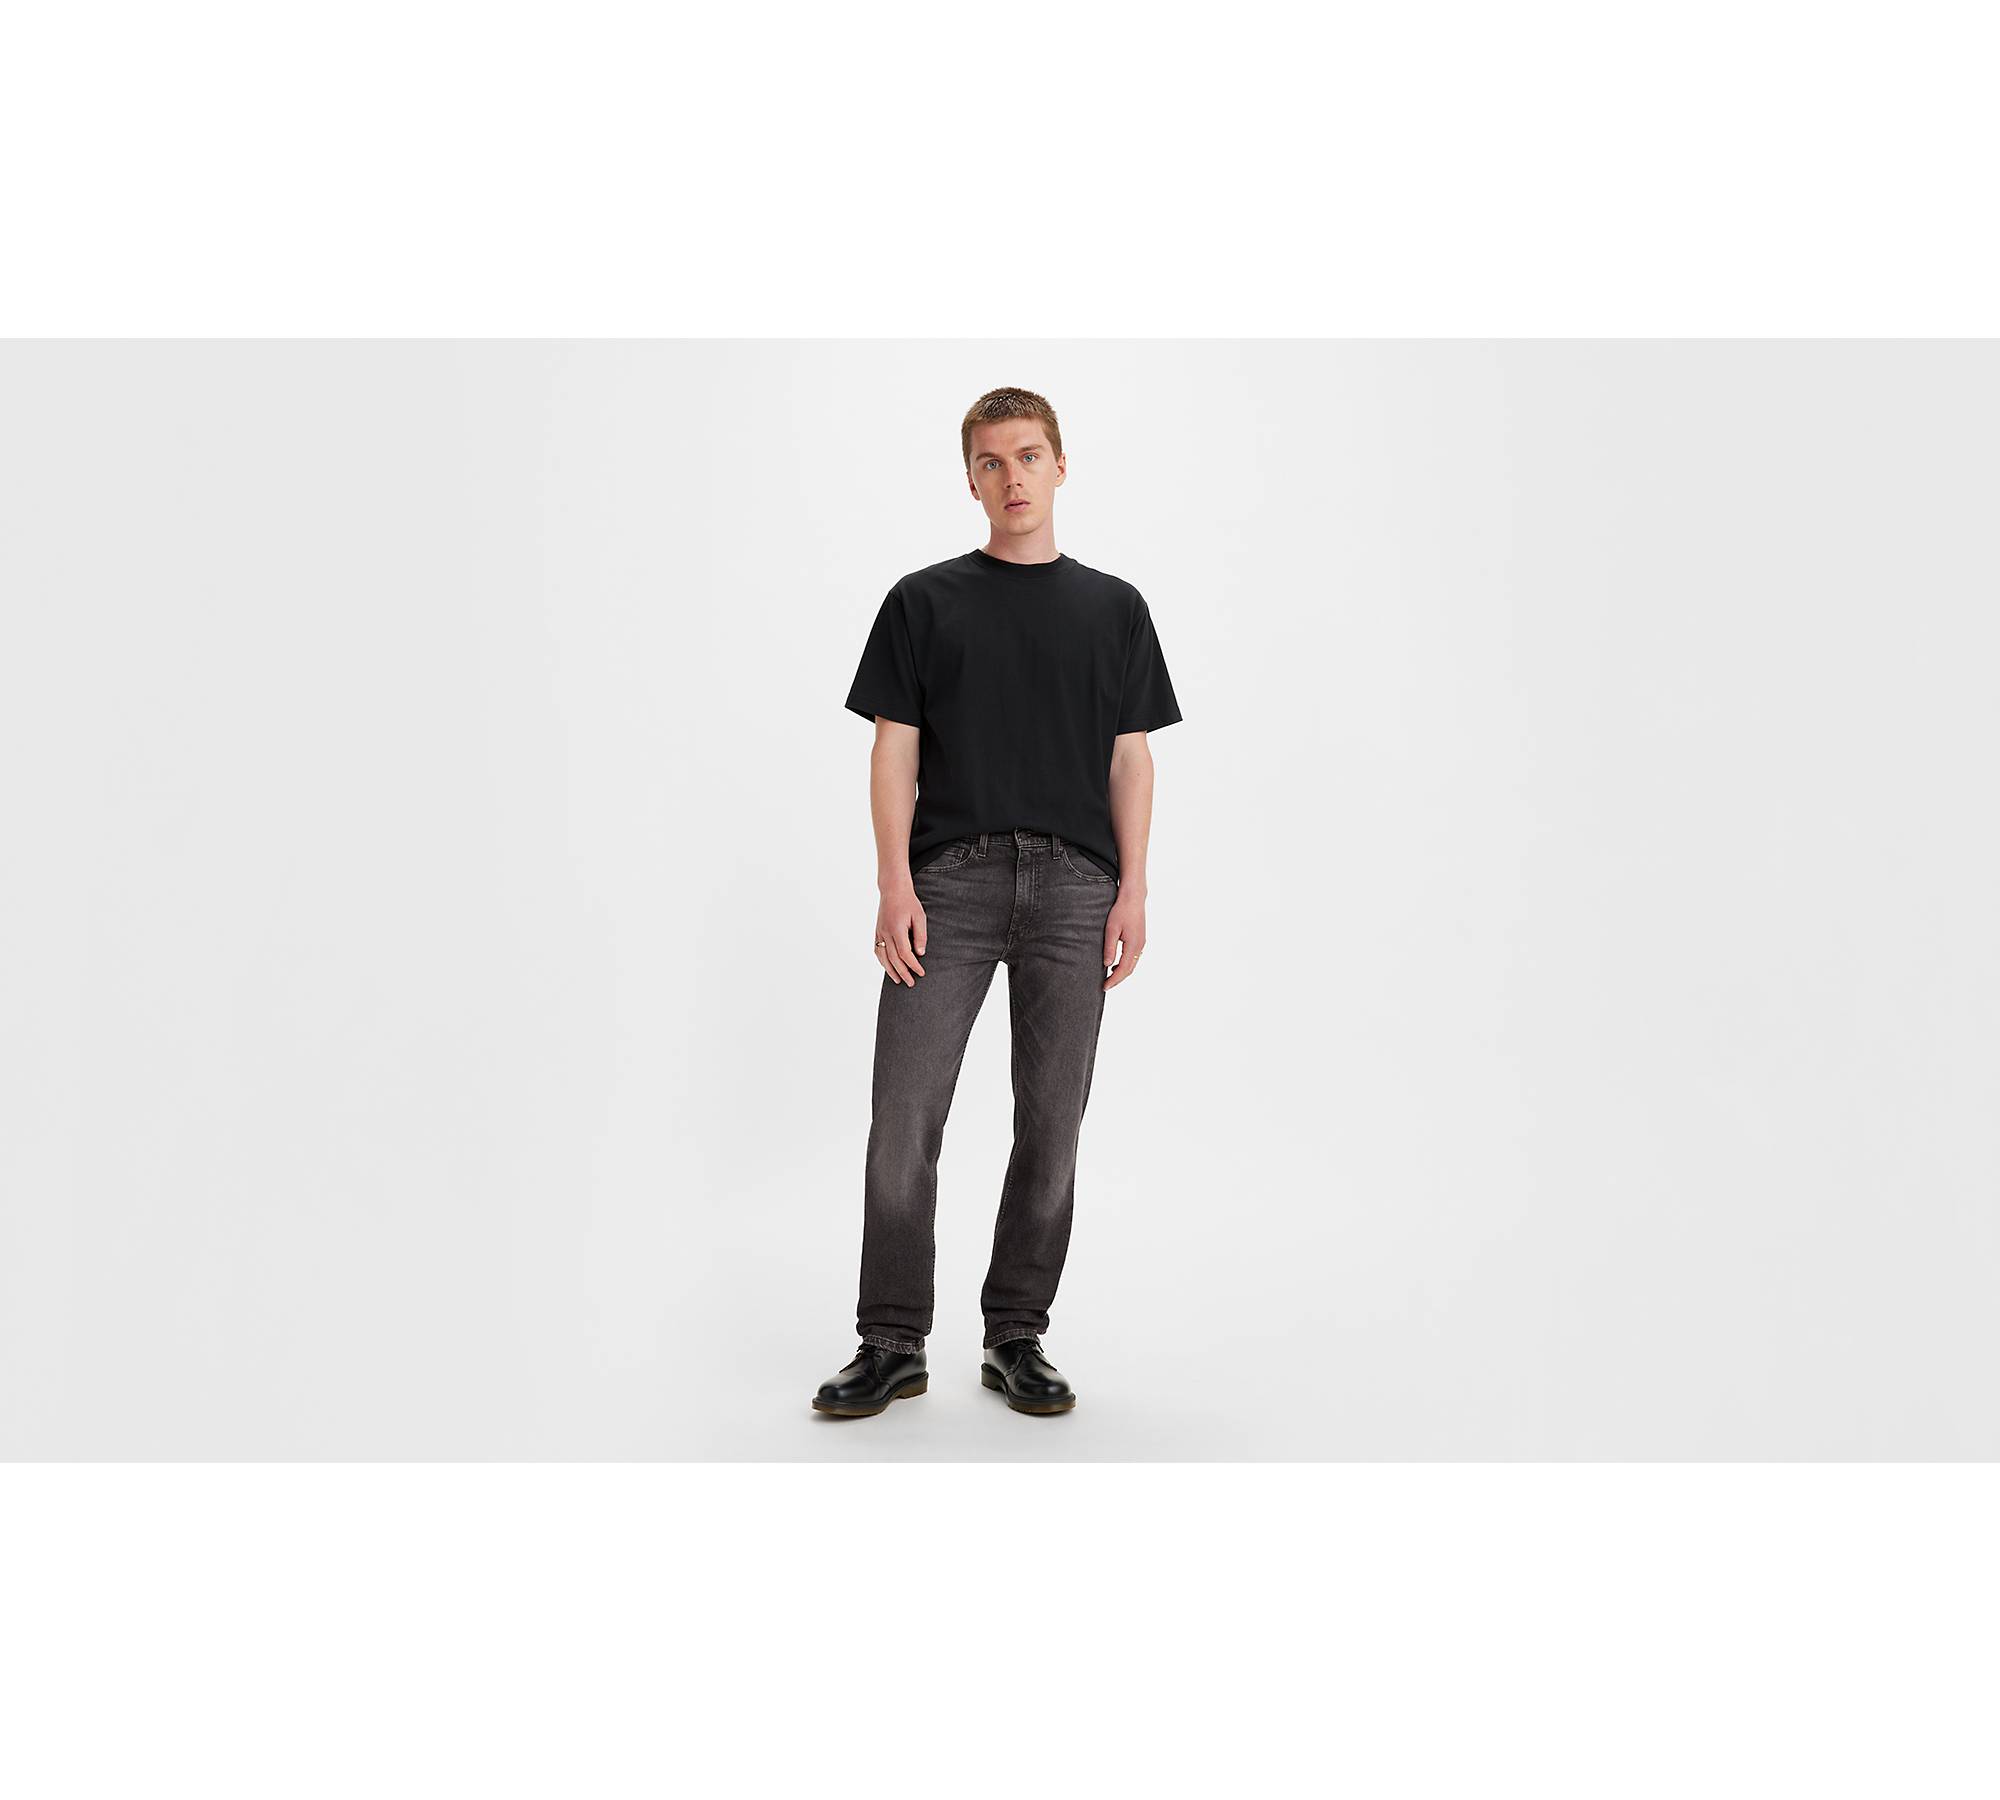 Men's Classic Black Jeans Advanced Stretch Regular Fit Denim Jean